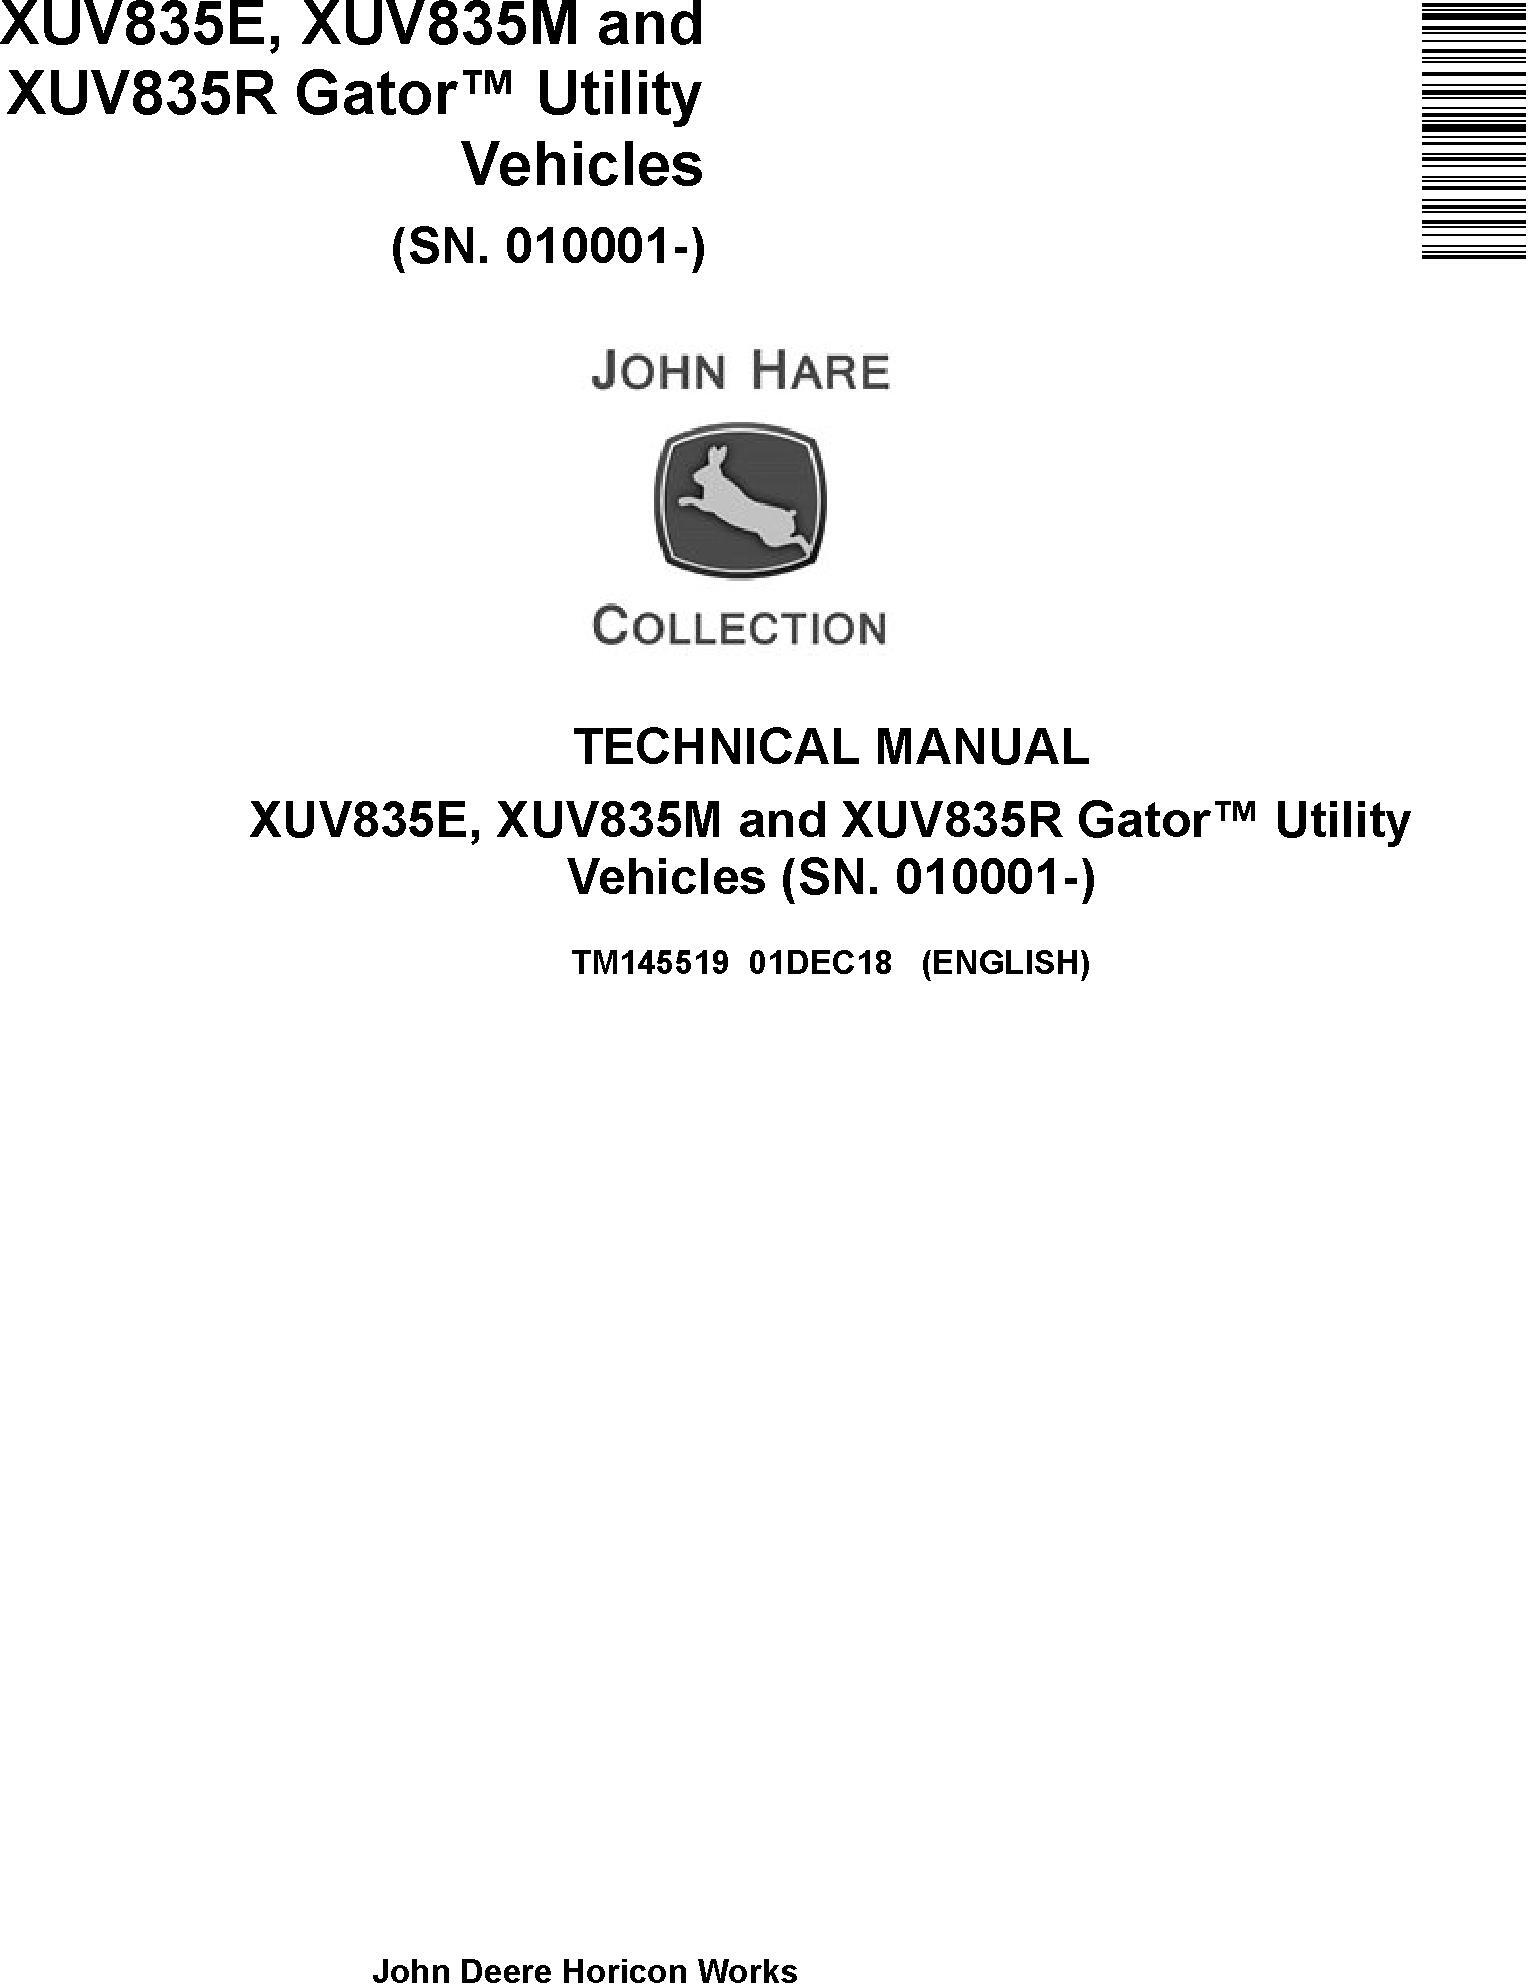 John Deere XUV835E, XUV835M, XUV835R Gator Utility Vehicles (SN.010001-) Technical Manual (TM145519)